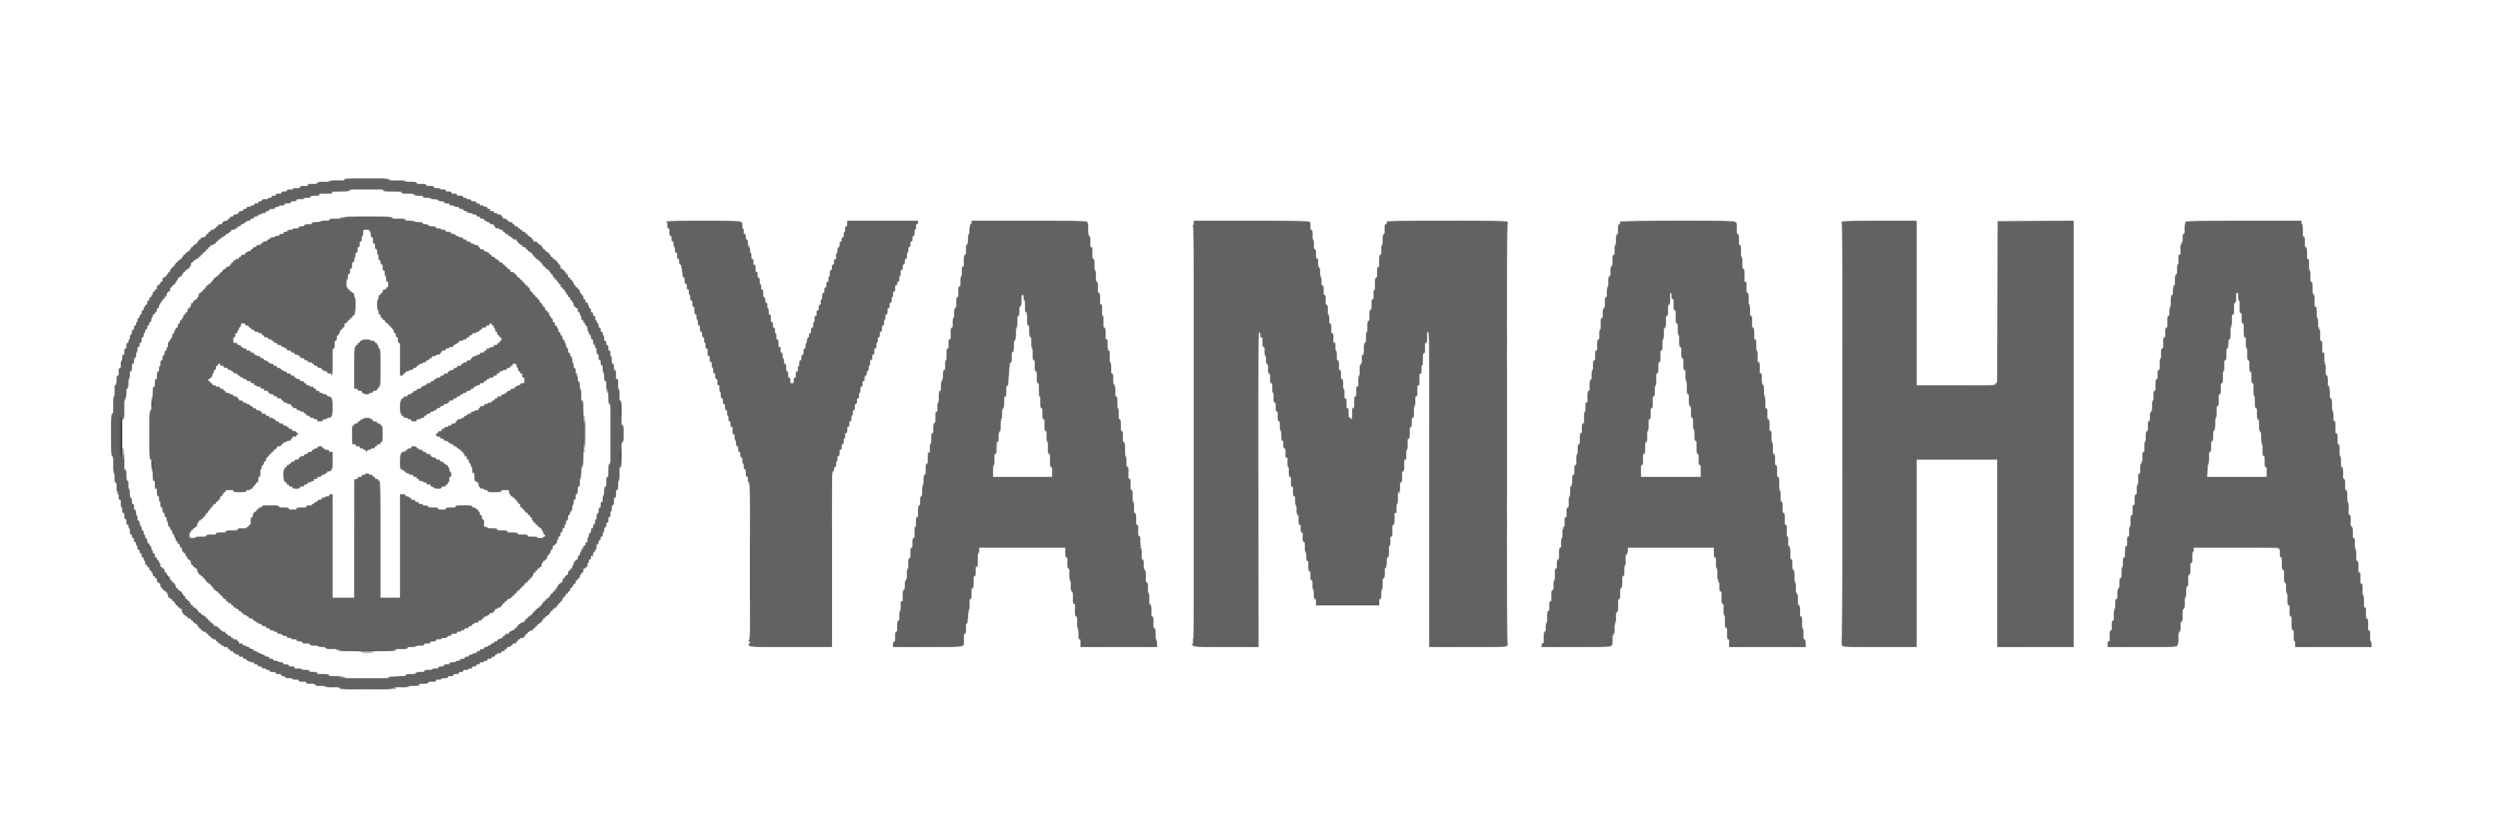 yamaha_logo gray.png